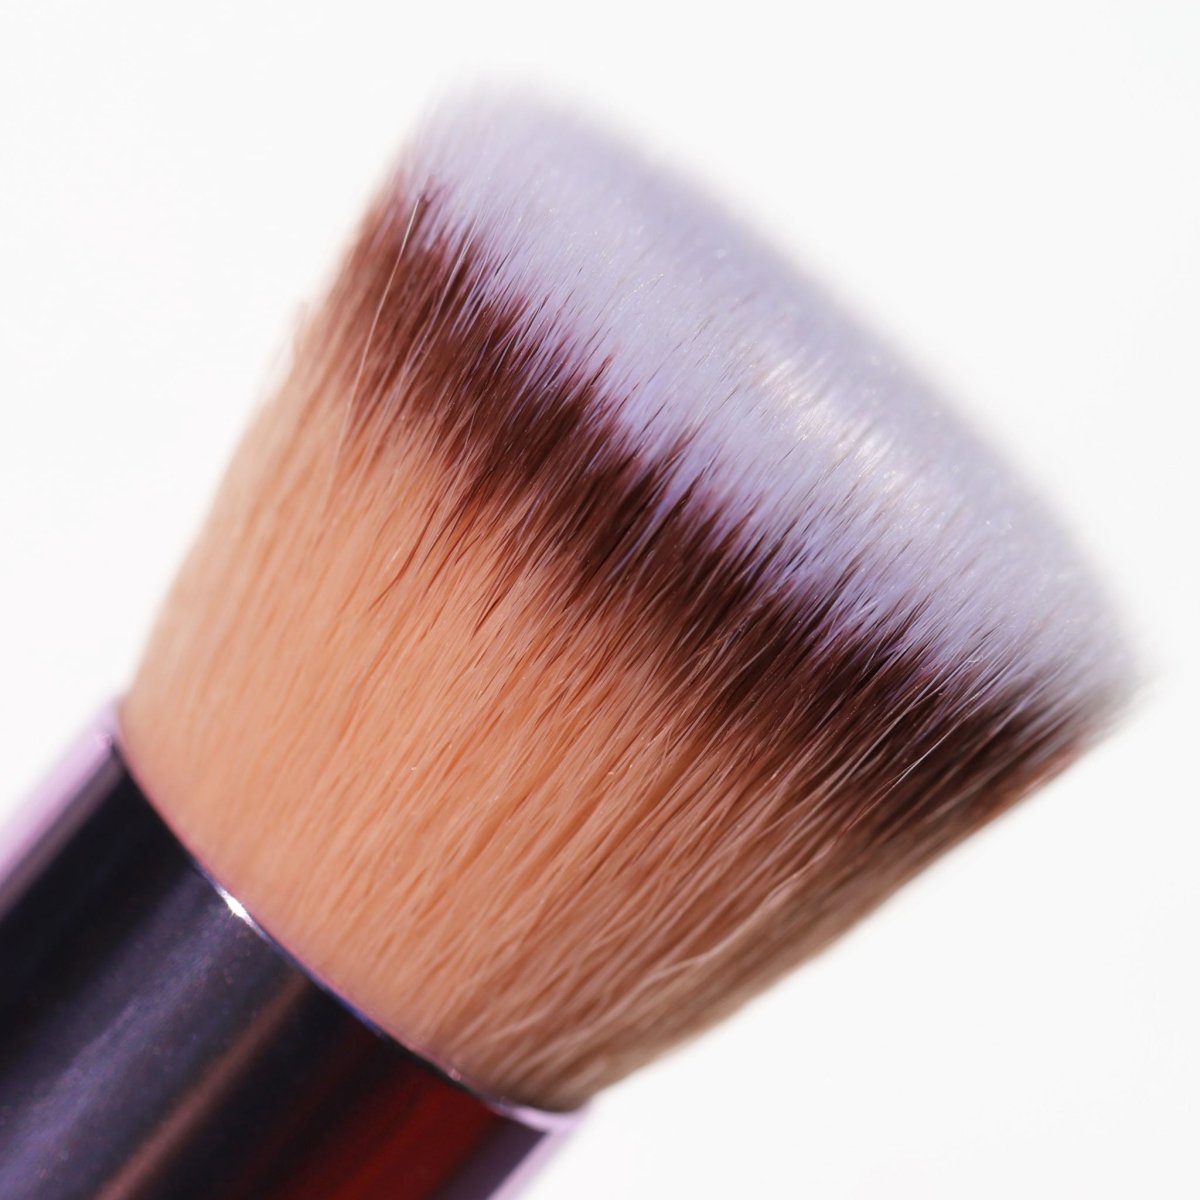 brown tan white flat-top kabuki foundation - complexion brush - half caked makeup